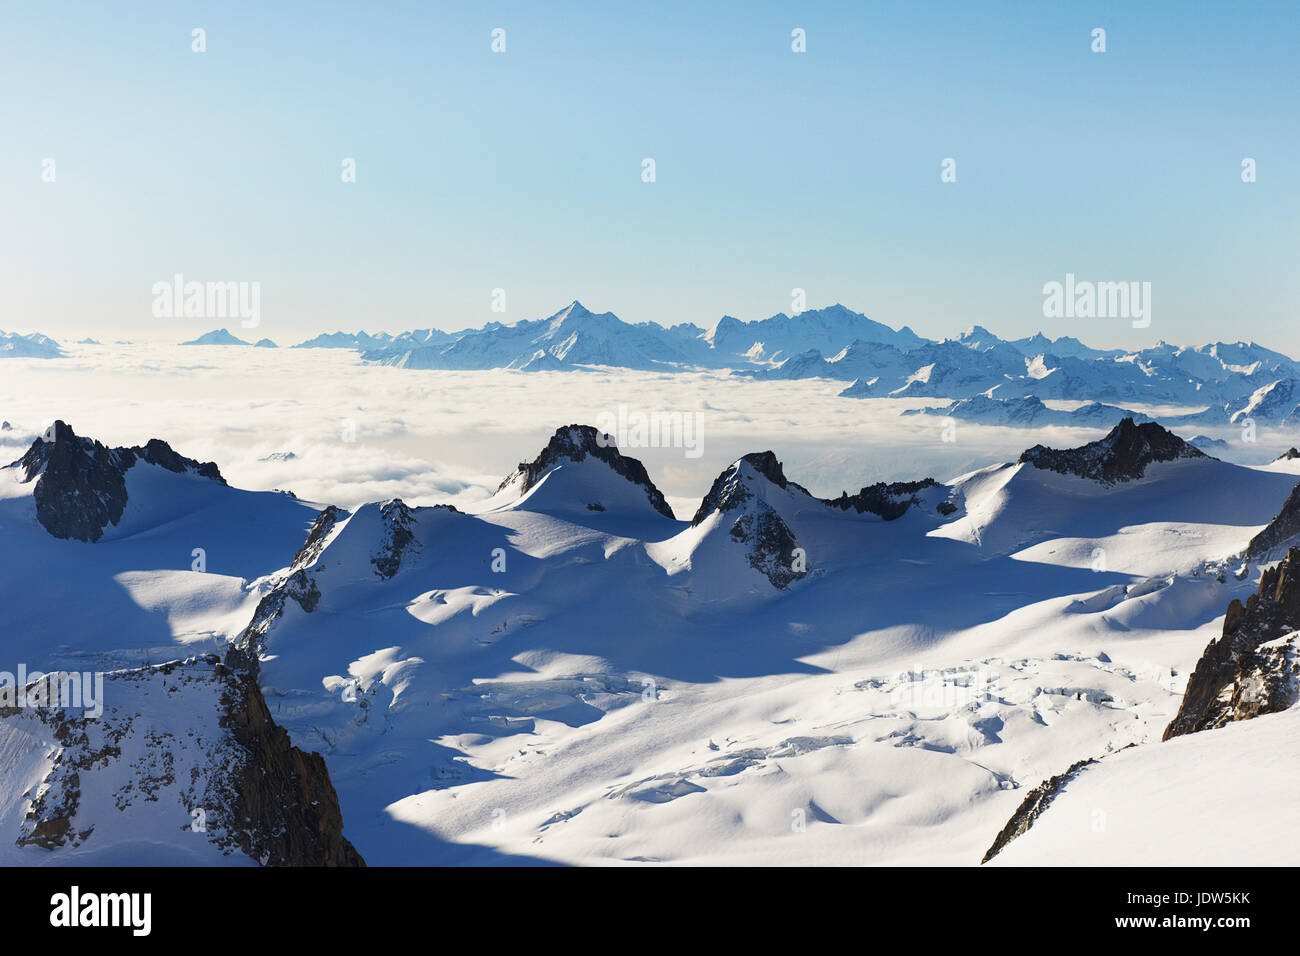 Snowy mountain scene, Chamonix, France Stock Photo